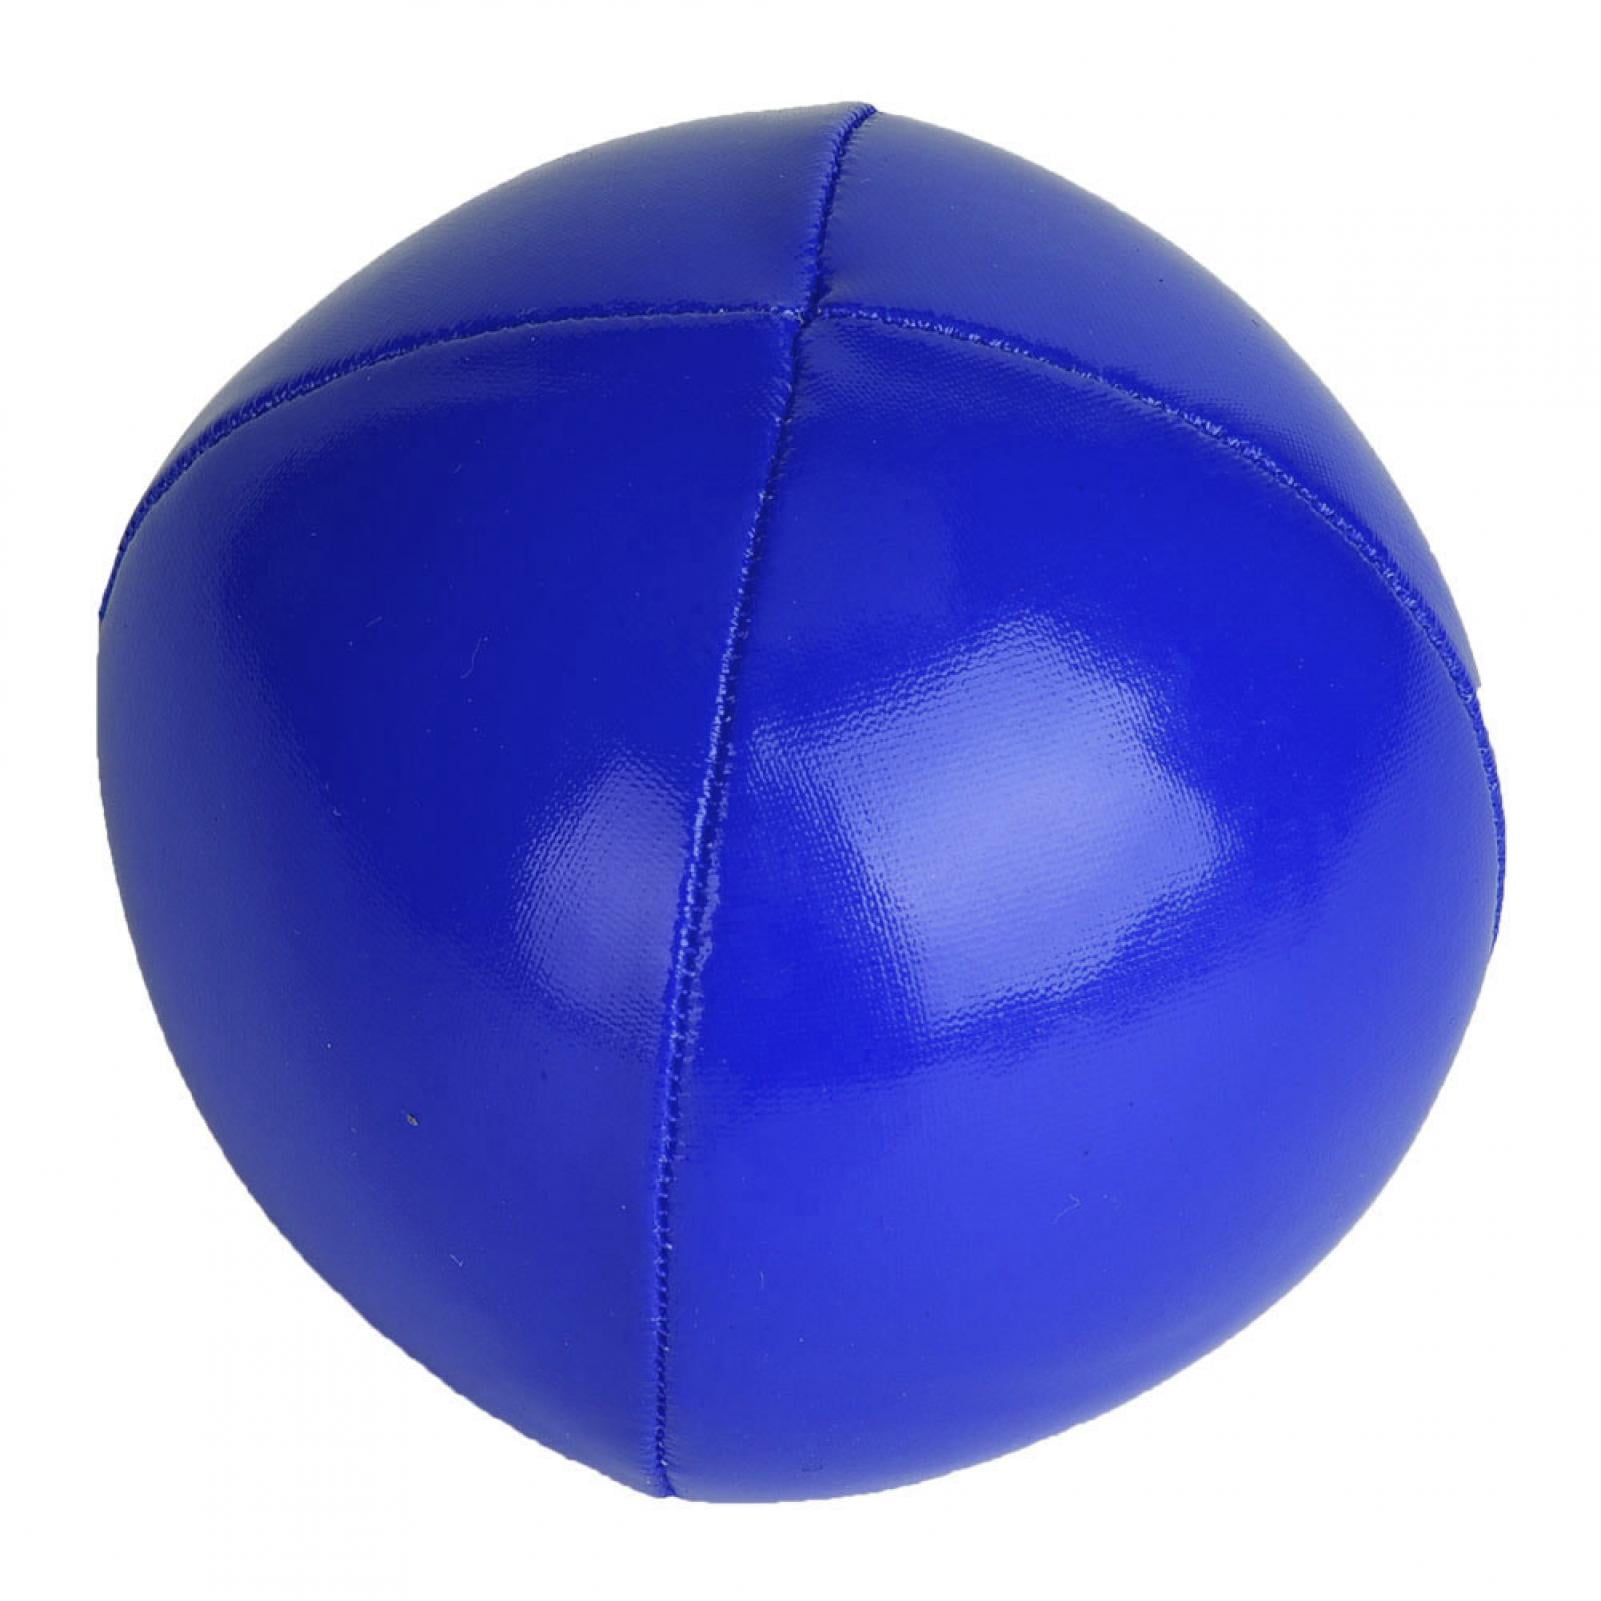 Details about   3pcs PU Juggling Balls Clown Juggle Ball Set Toy Fun for Beginner Professionals 